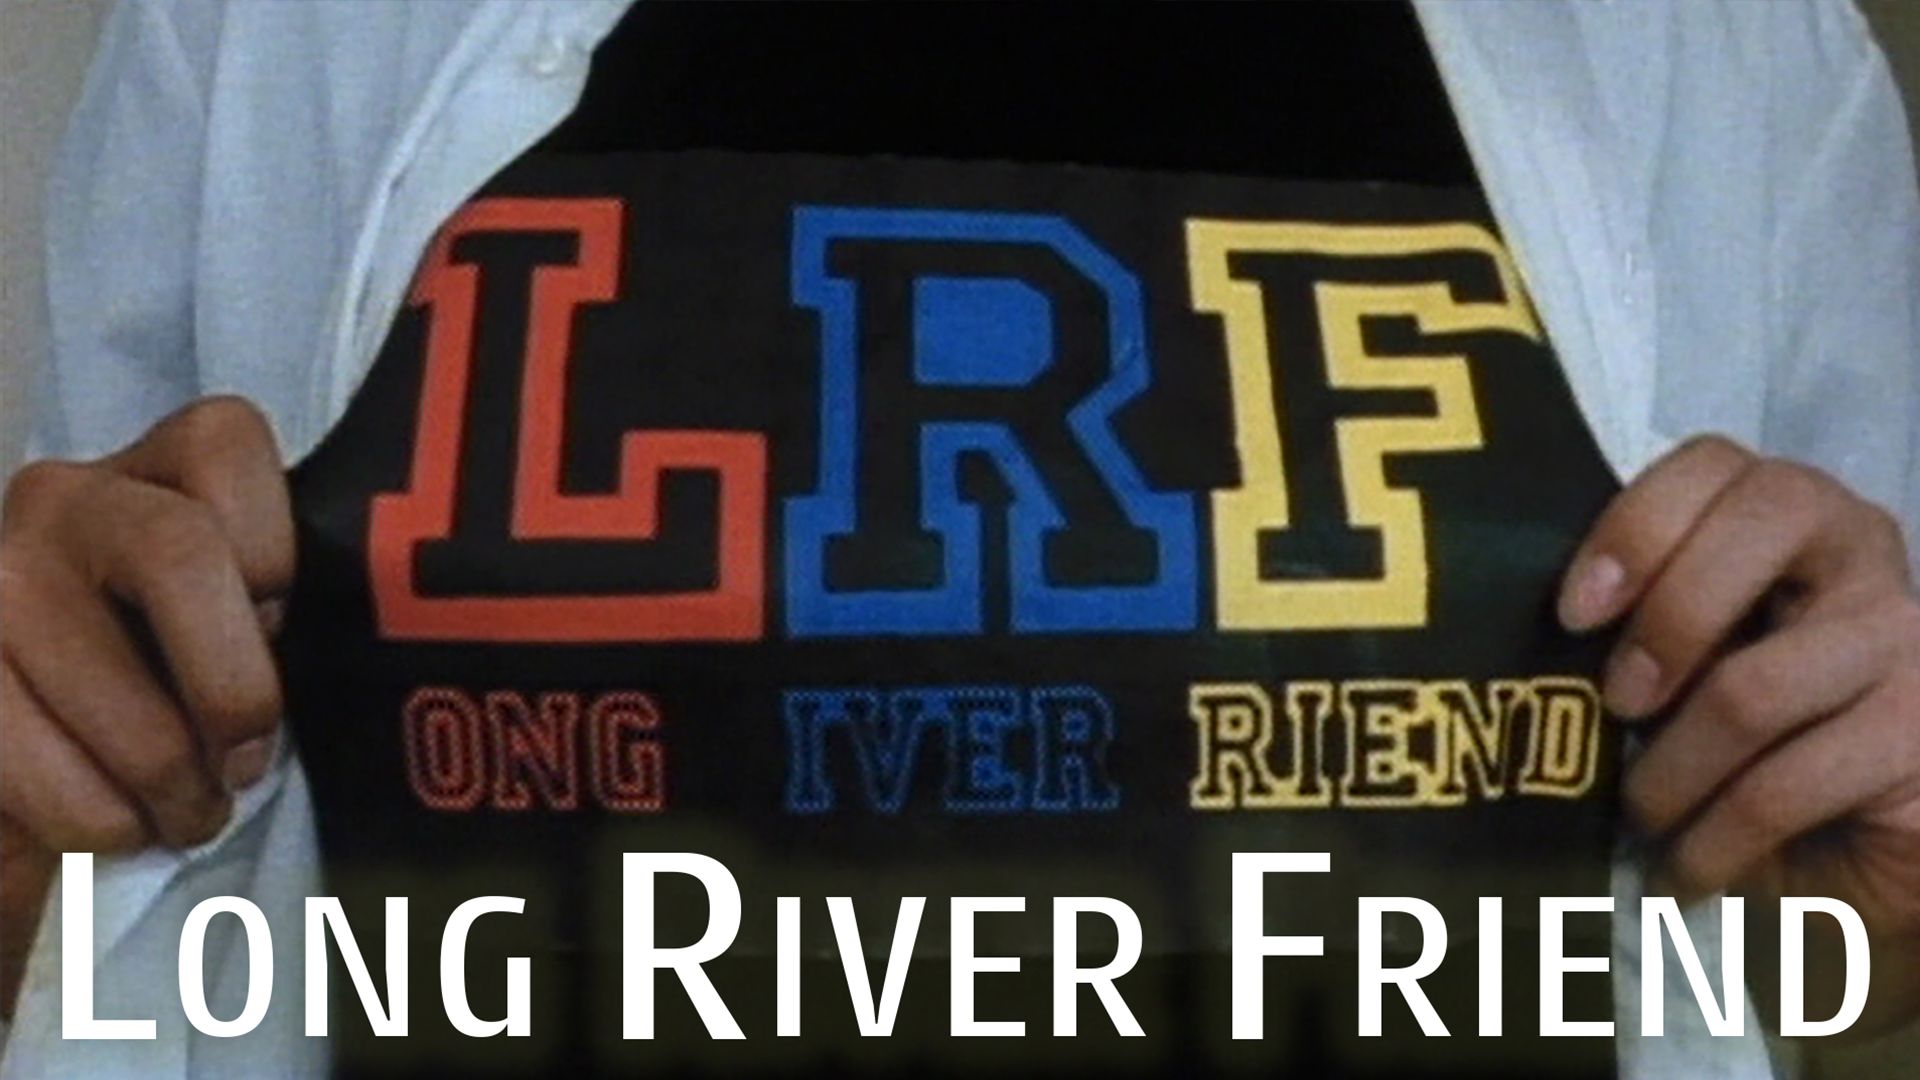 LONG RIVER FRIEND